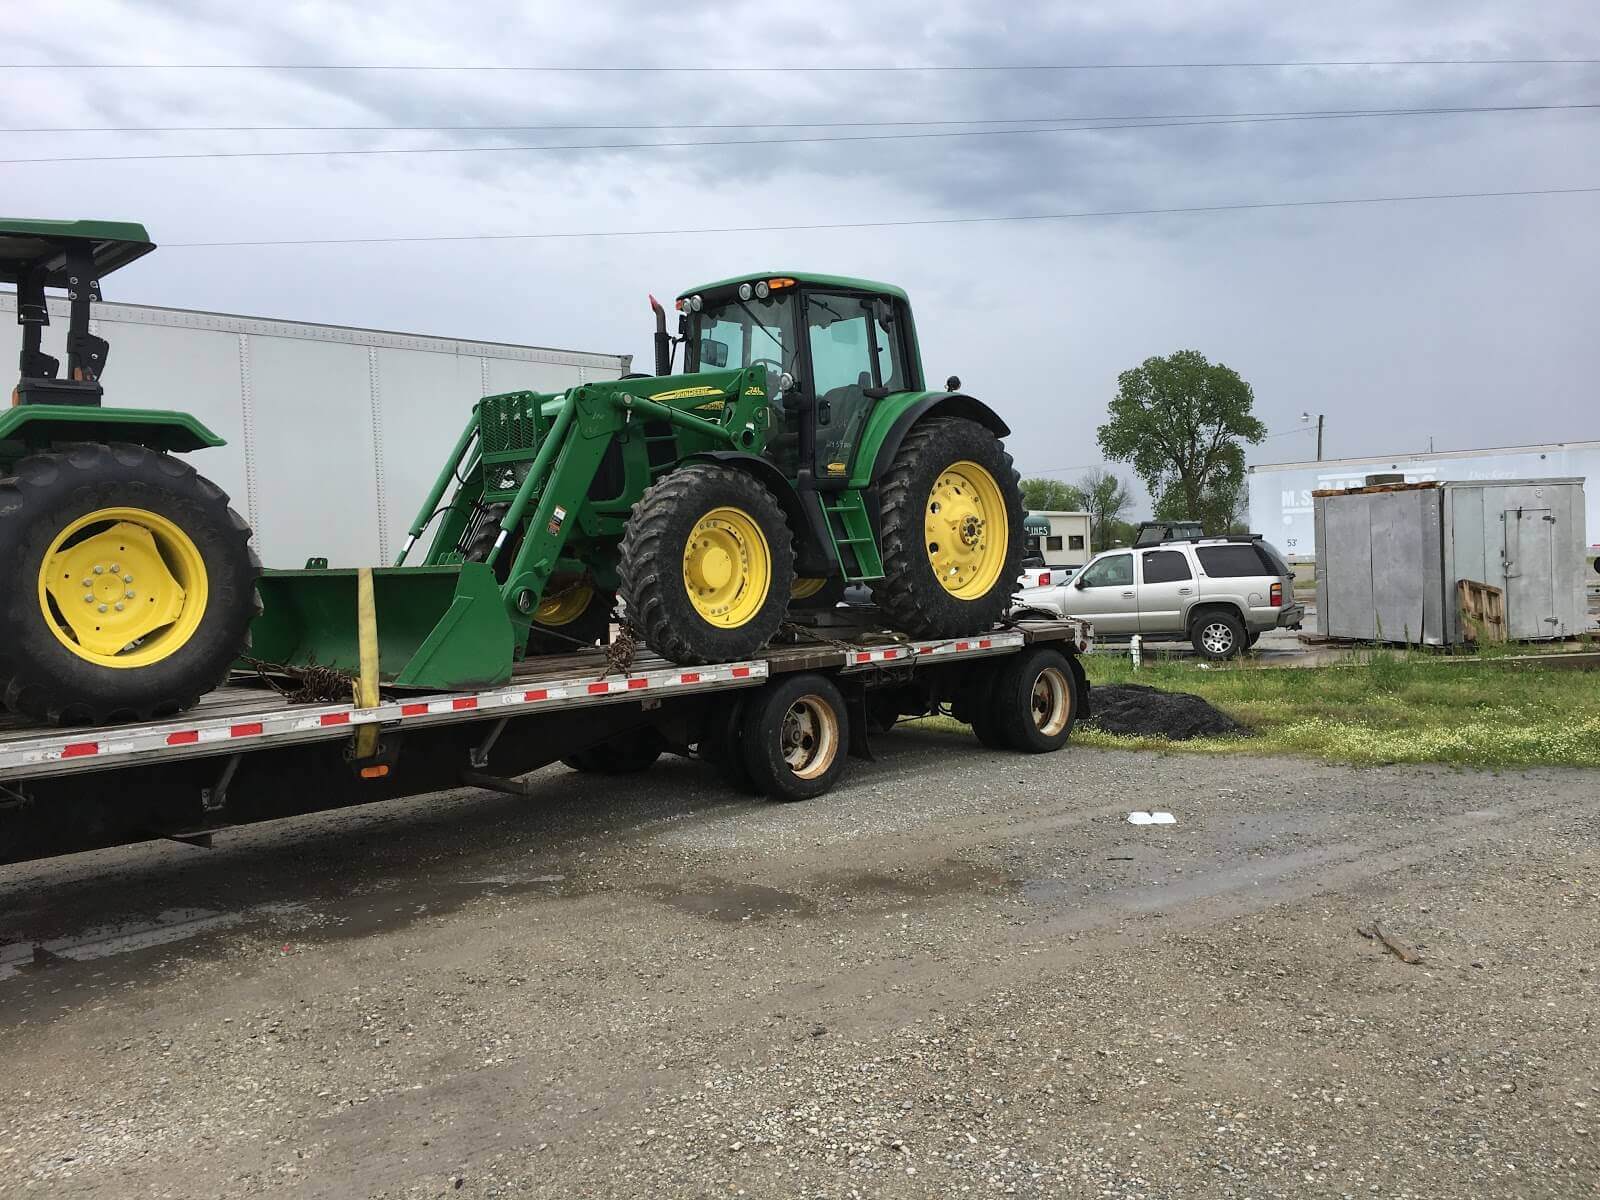 John Deere 7410 Tractor being transported